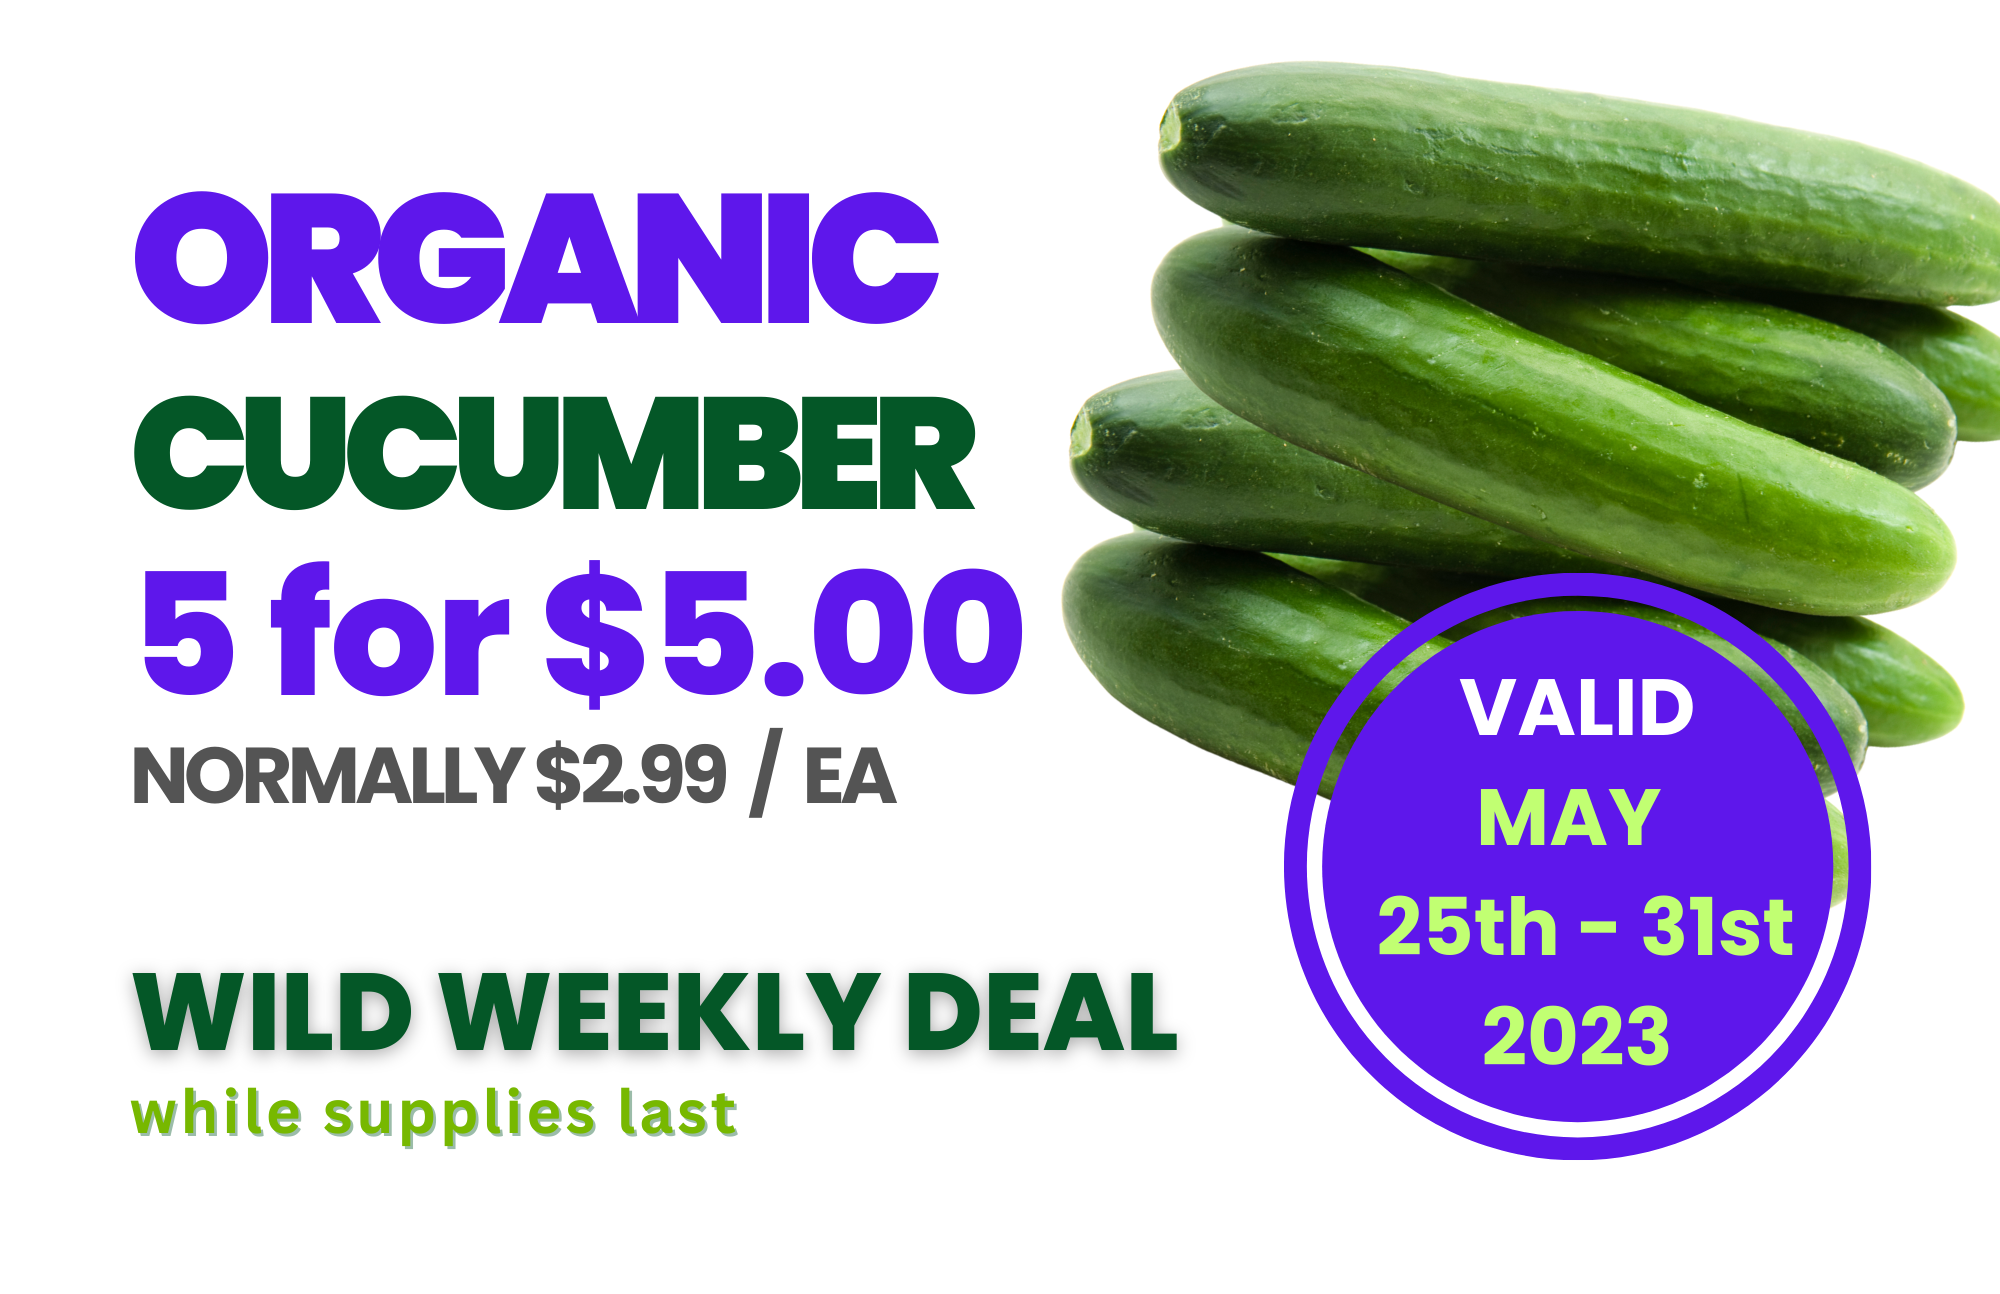 2023-0525-0531 Wild Weekend Deal Organic Cucumber.png